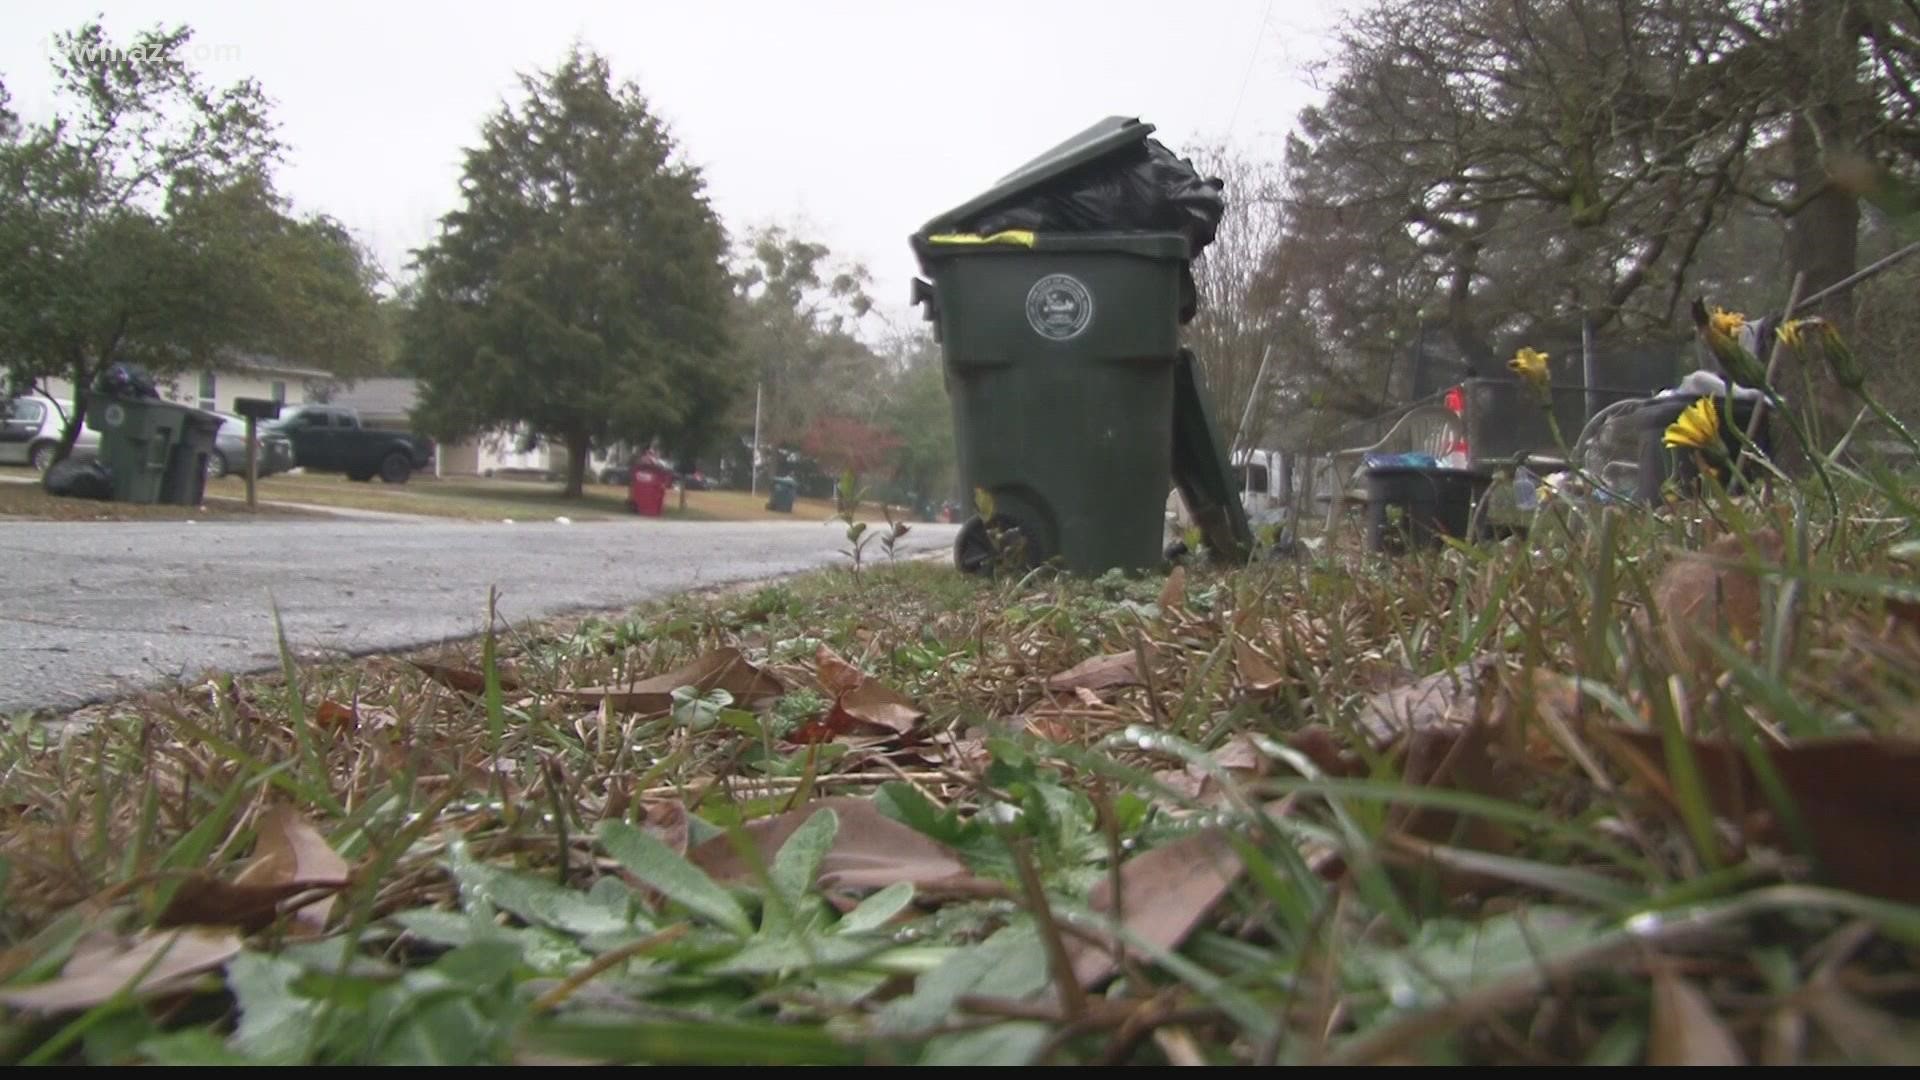 People in several neighborhoods say Advanced Disposal hasn’t picked up their trash in weeks